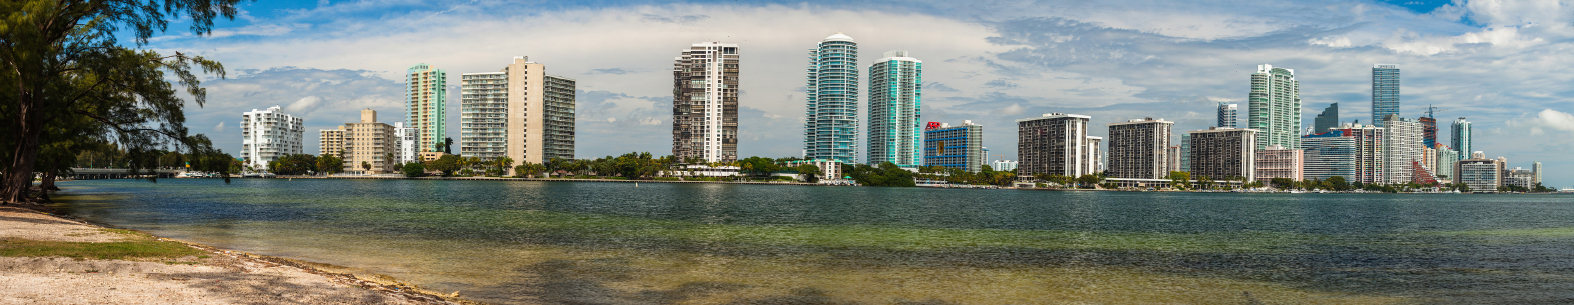 VR Business Brokers Miami,Coral Gables, FL - Acheter un Business